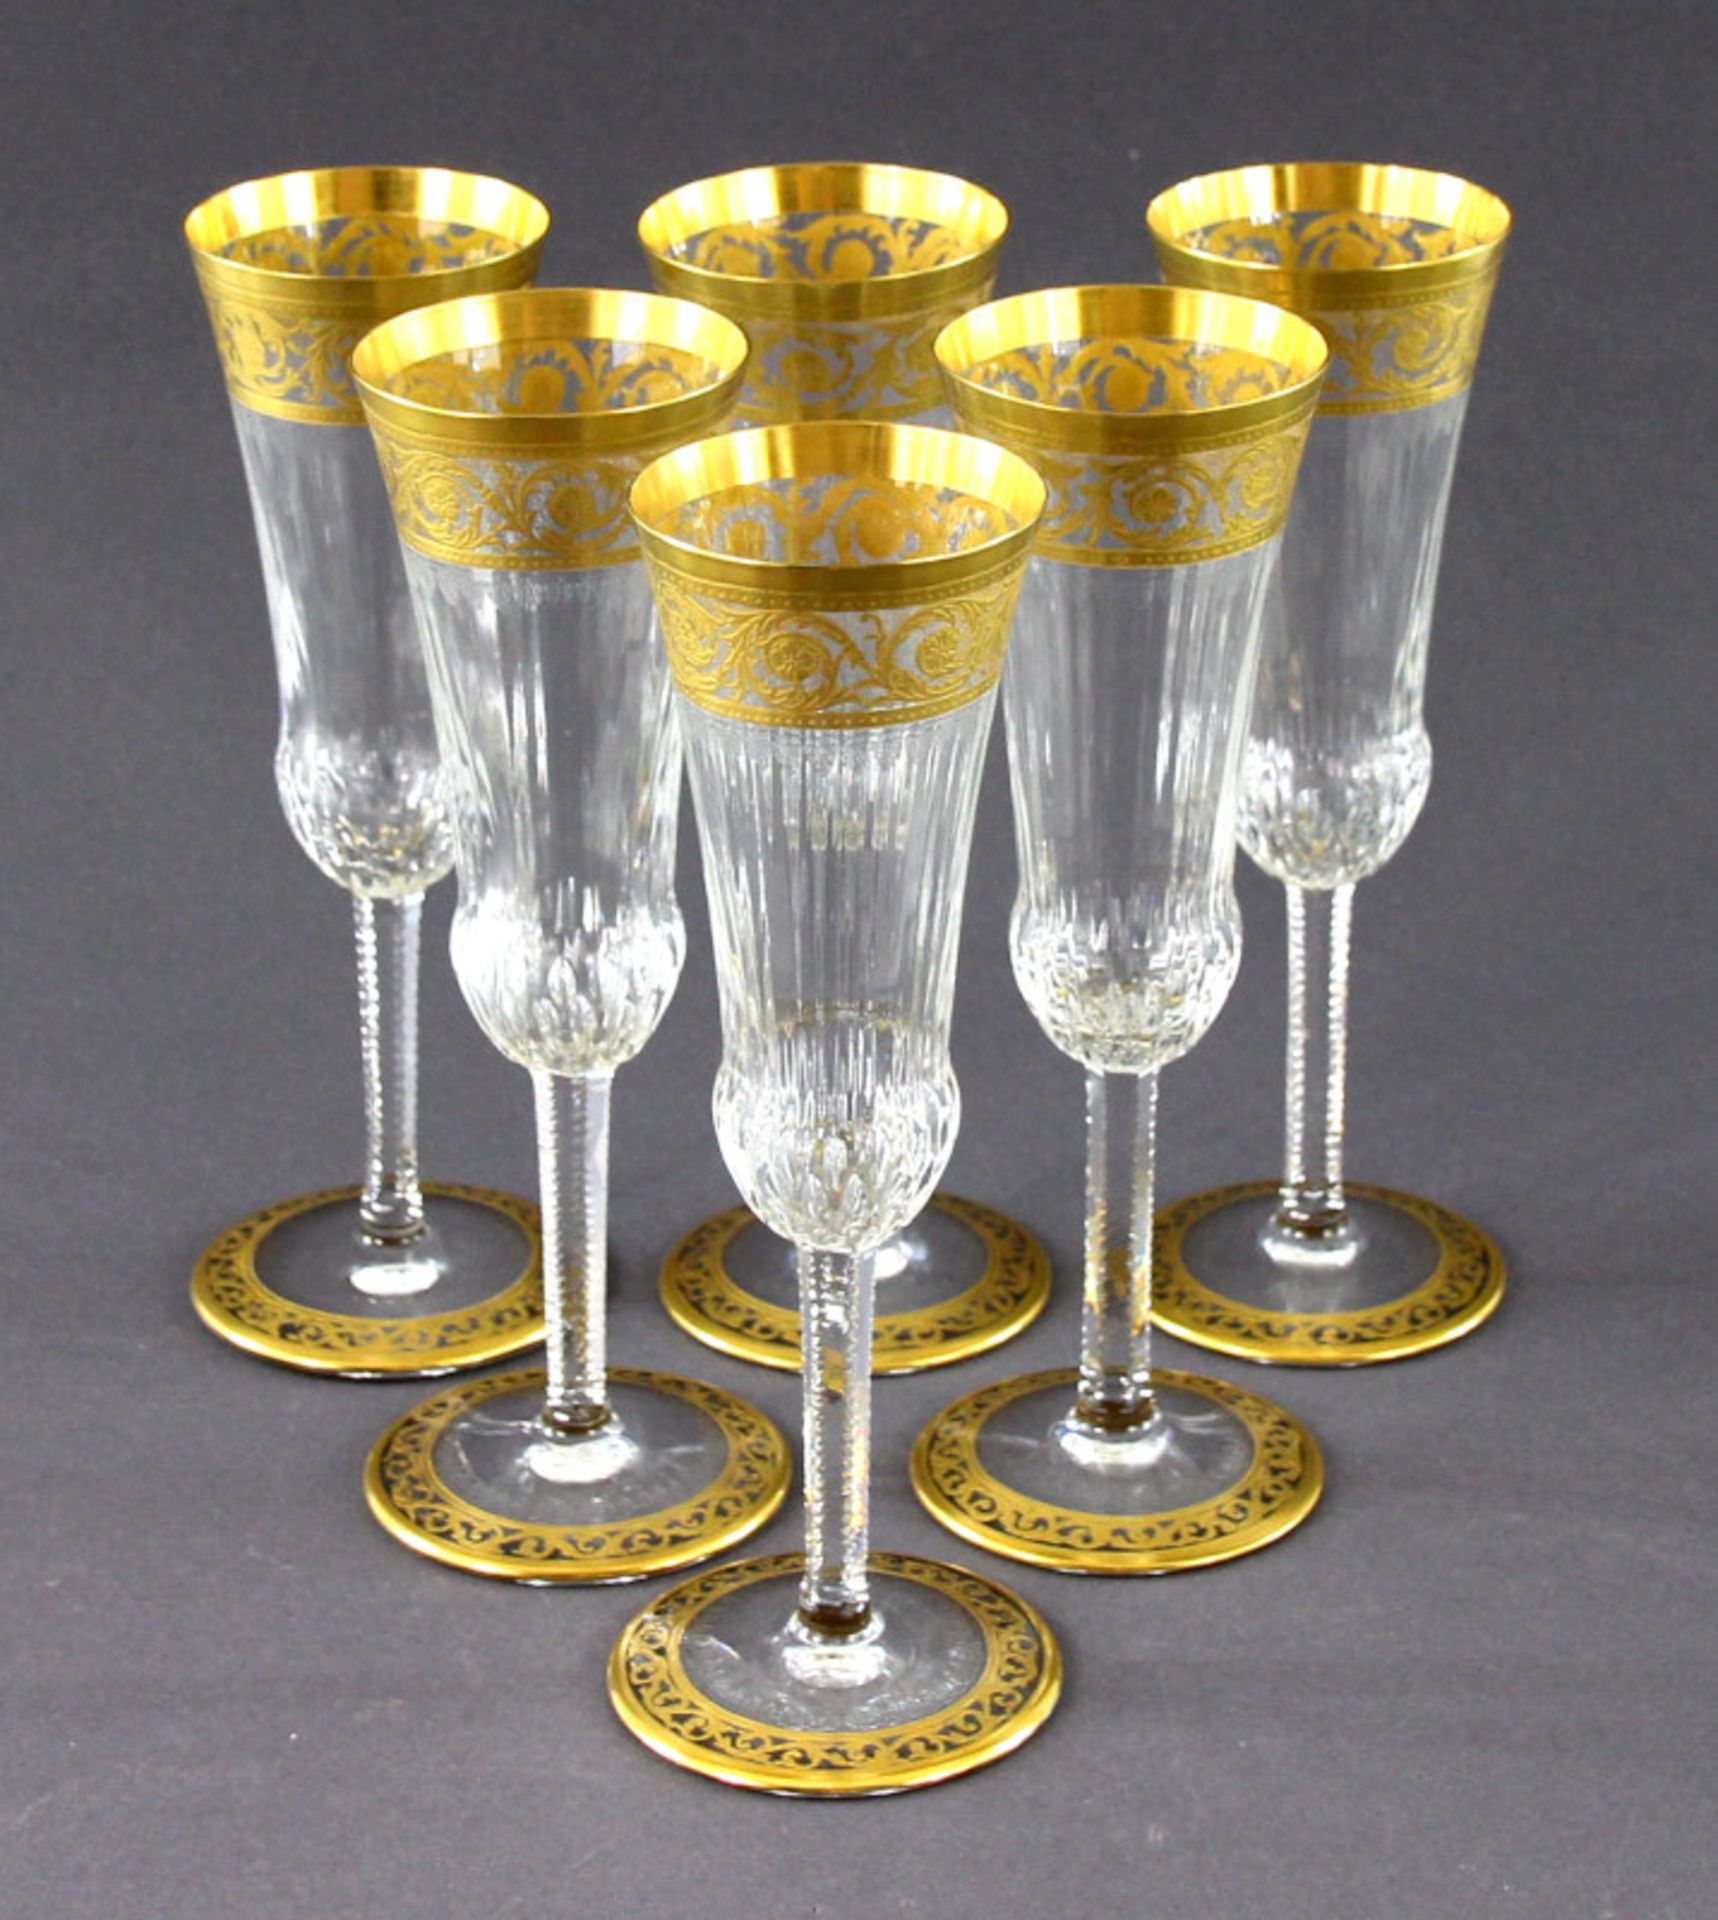 6 Sektflöten der Manufaktur Saint-Louis (Frankreich), "Thistle Gold", 20. Jahrhundertfarbloses Glas,